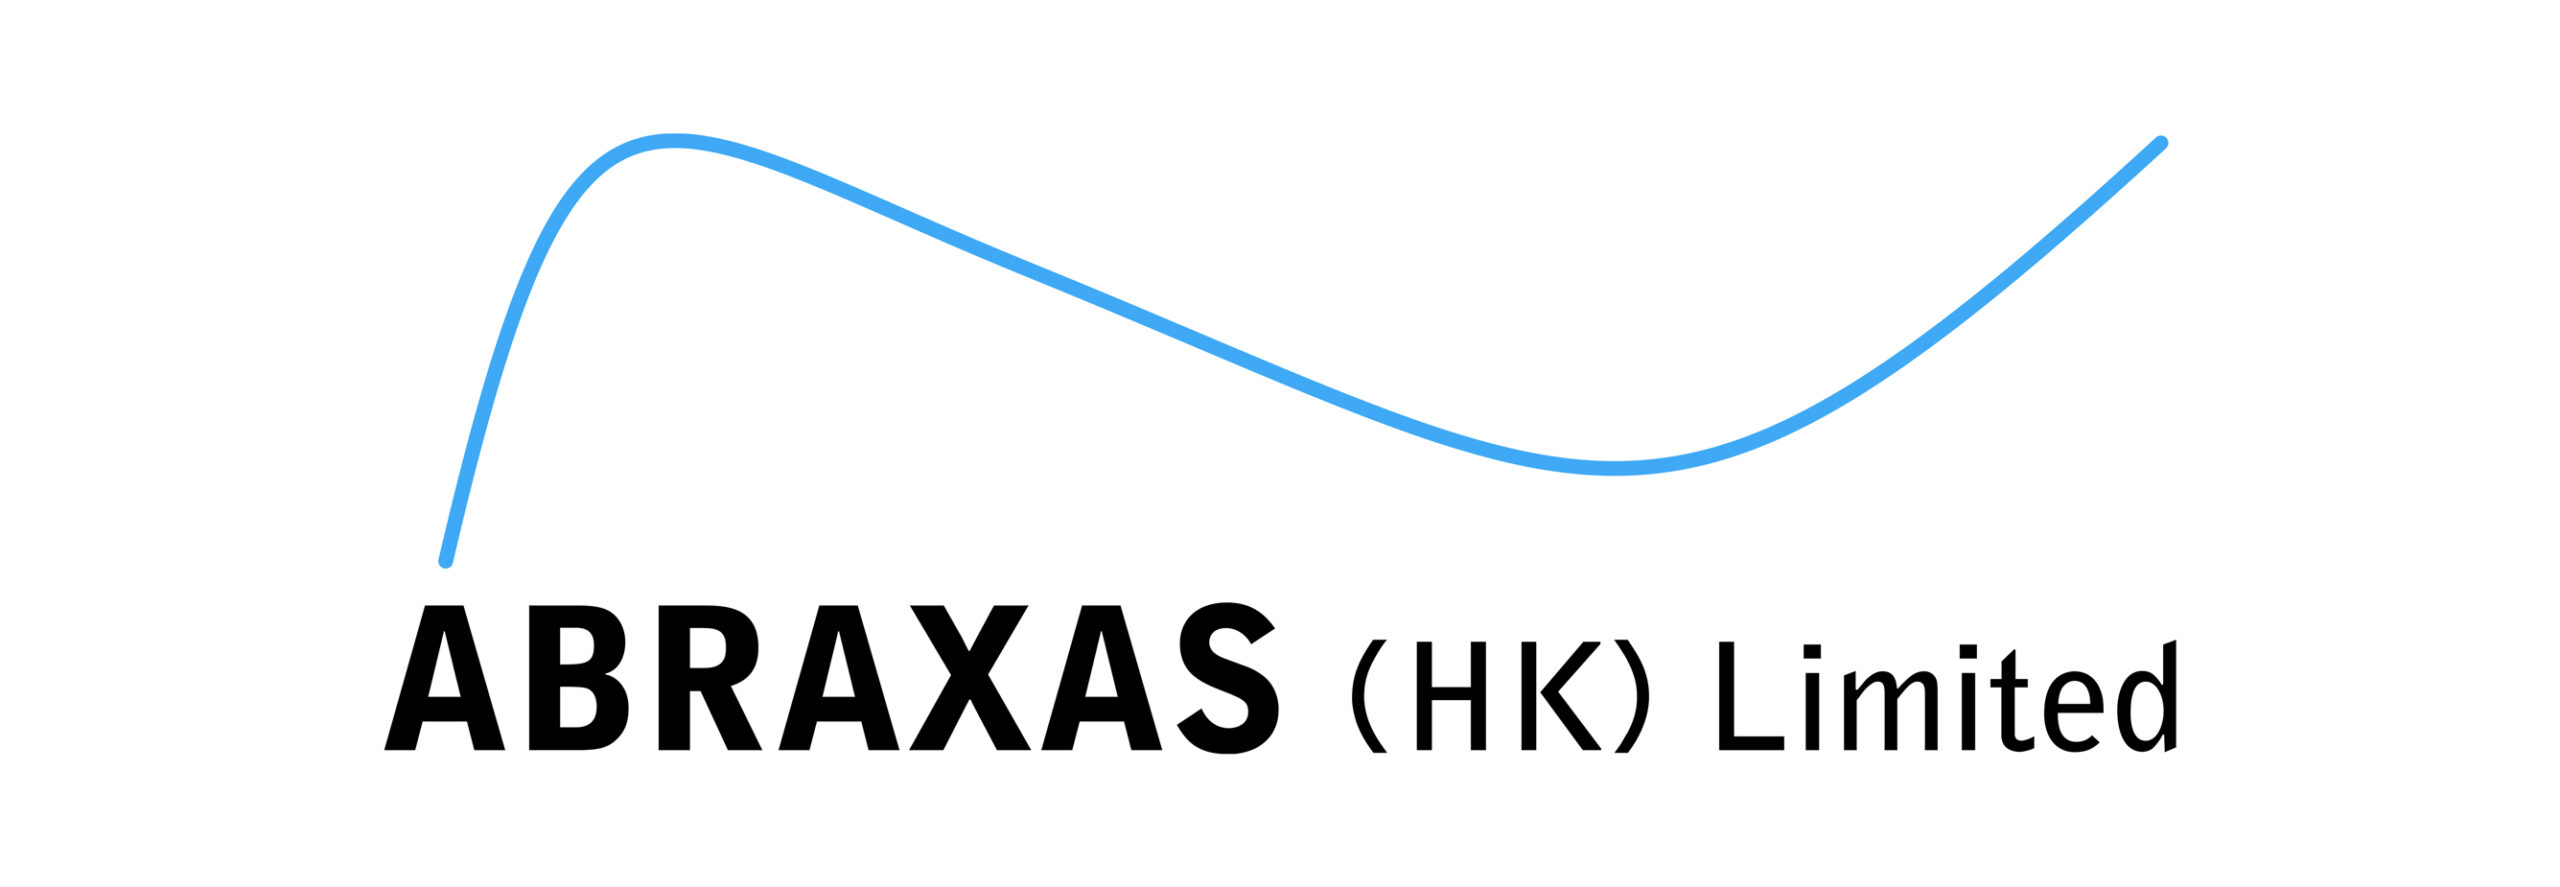 Abraxas (HK) Limited